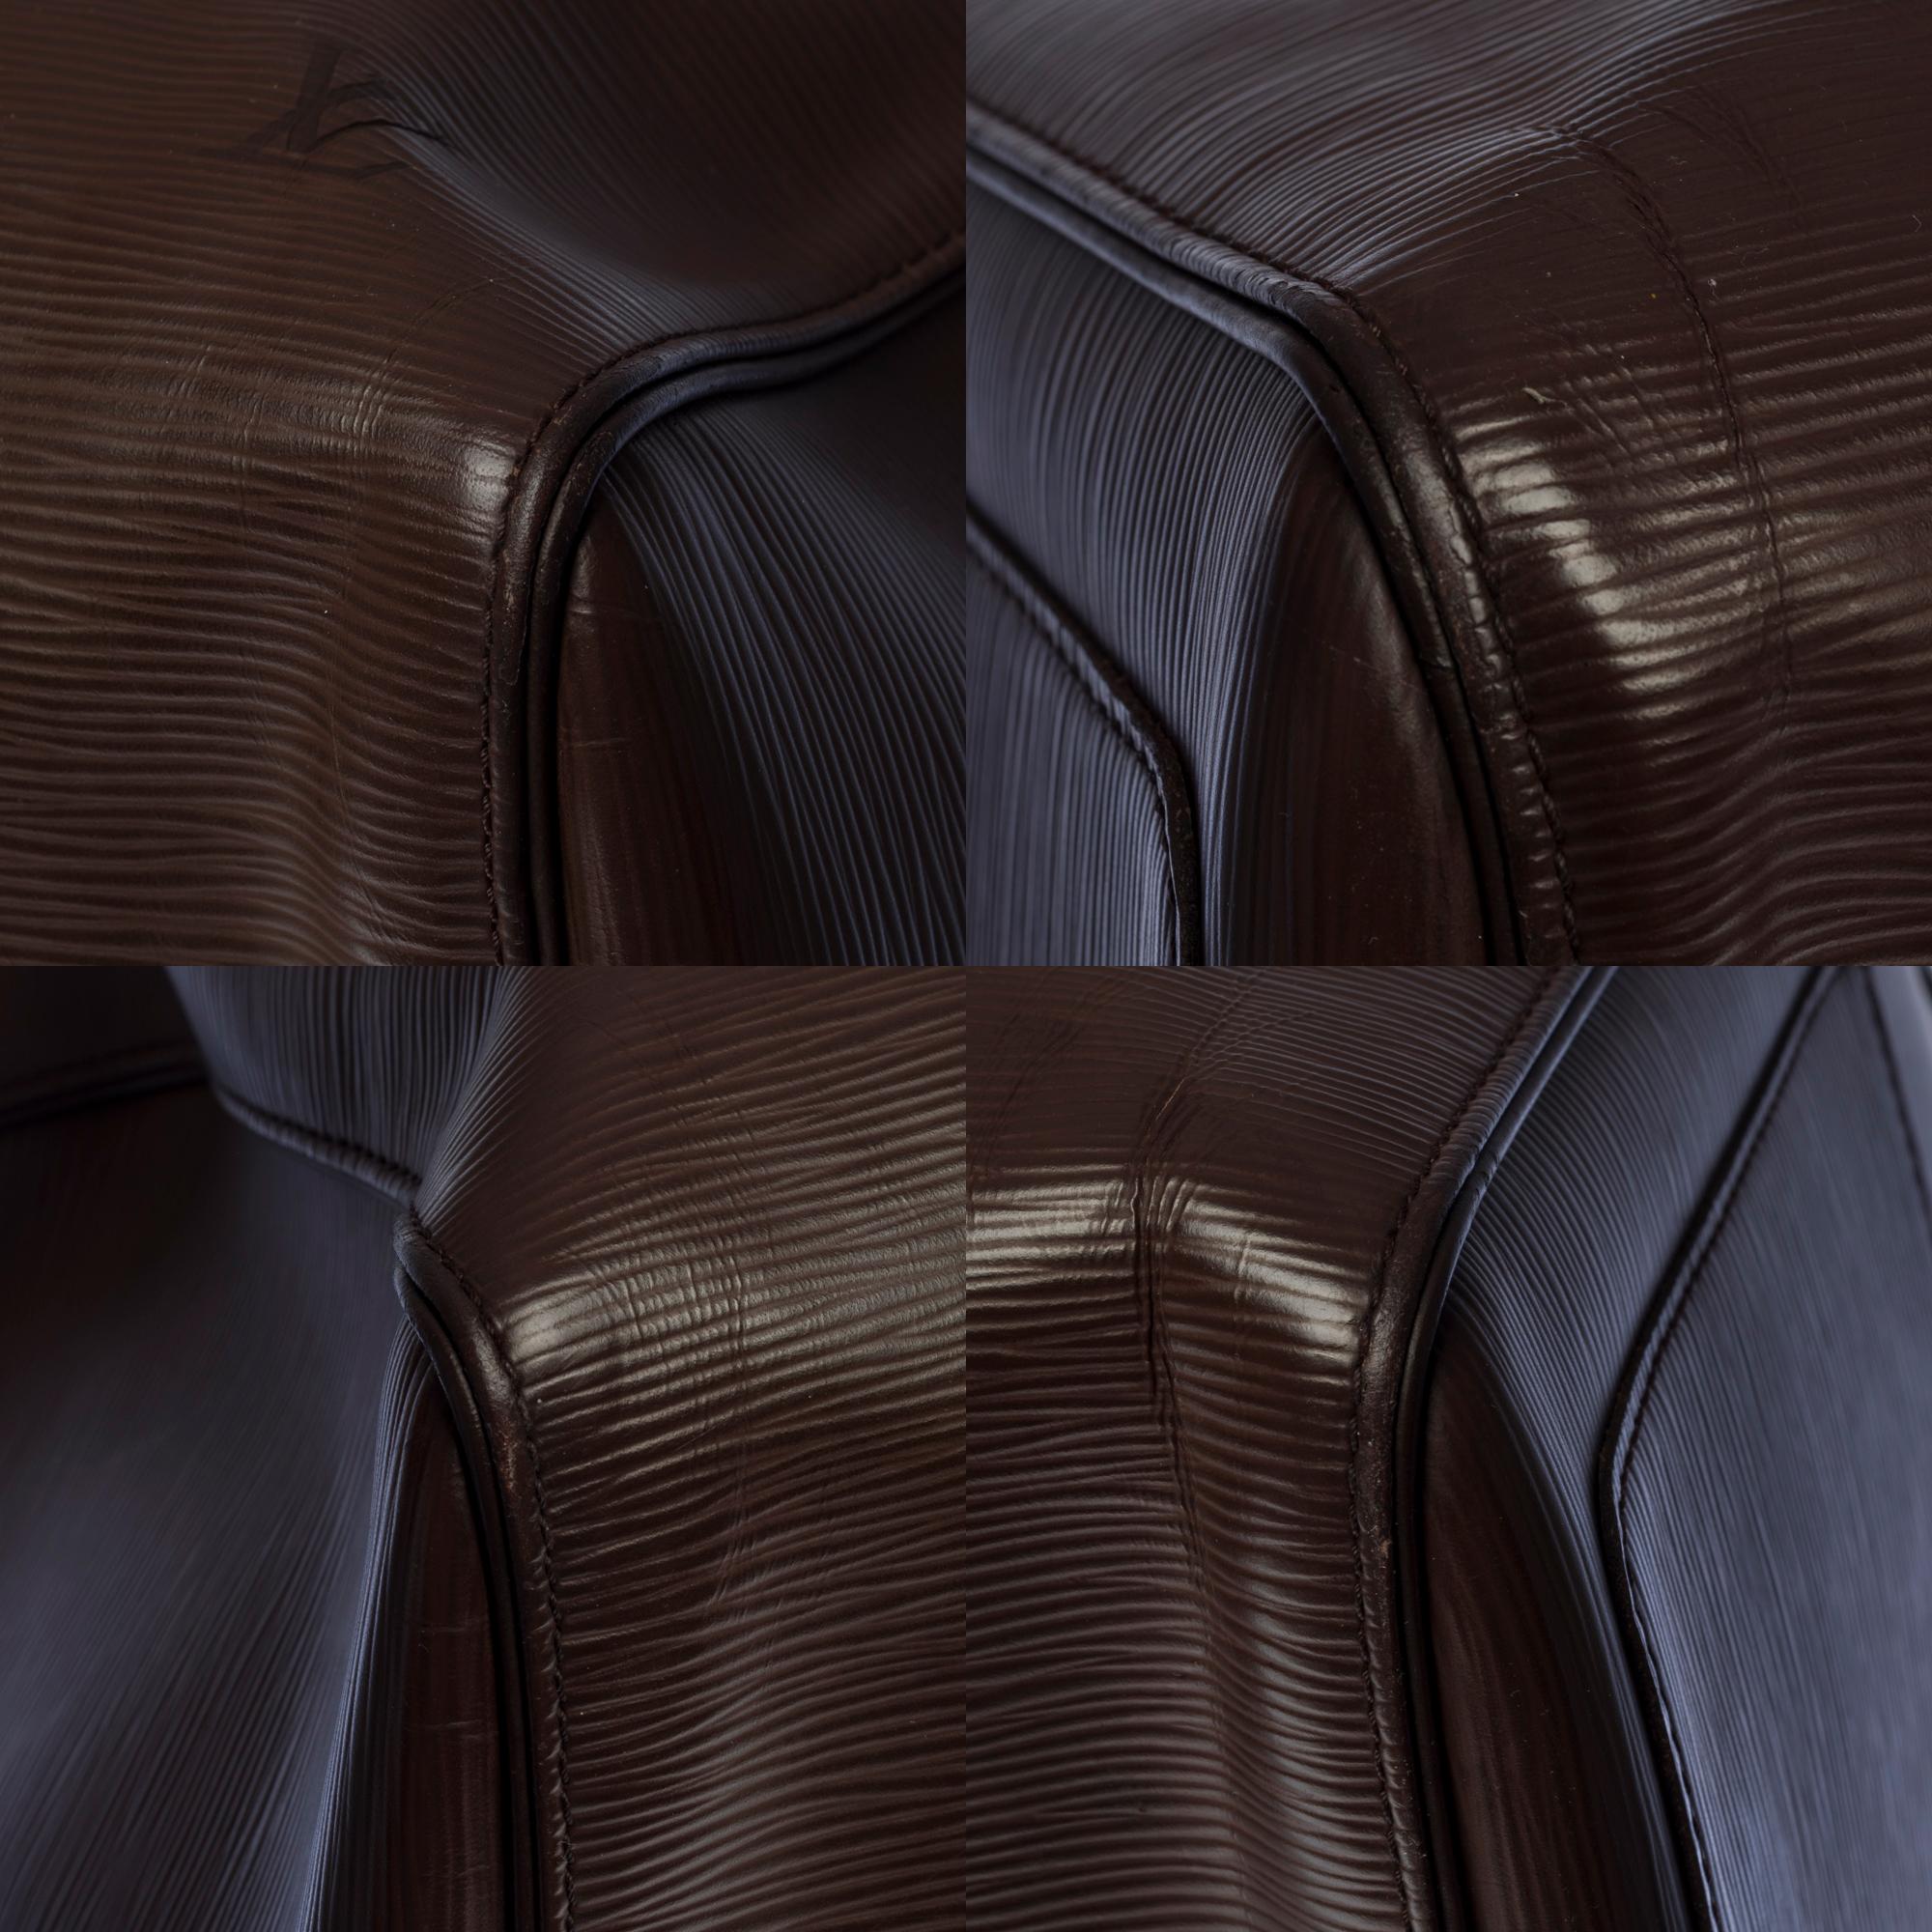 Louis Vuitton Keepall 55 Travel bag in Brown épi leather, matte SHW 5